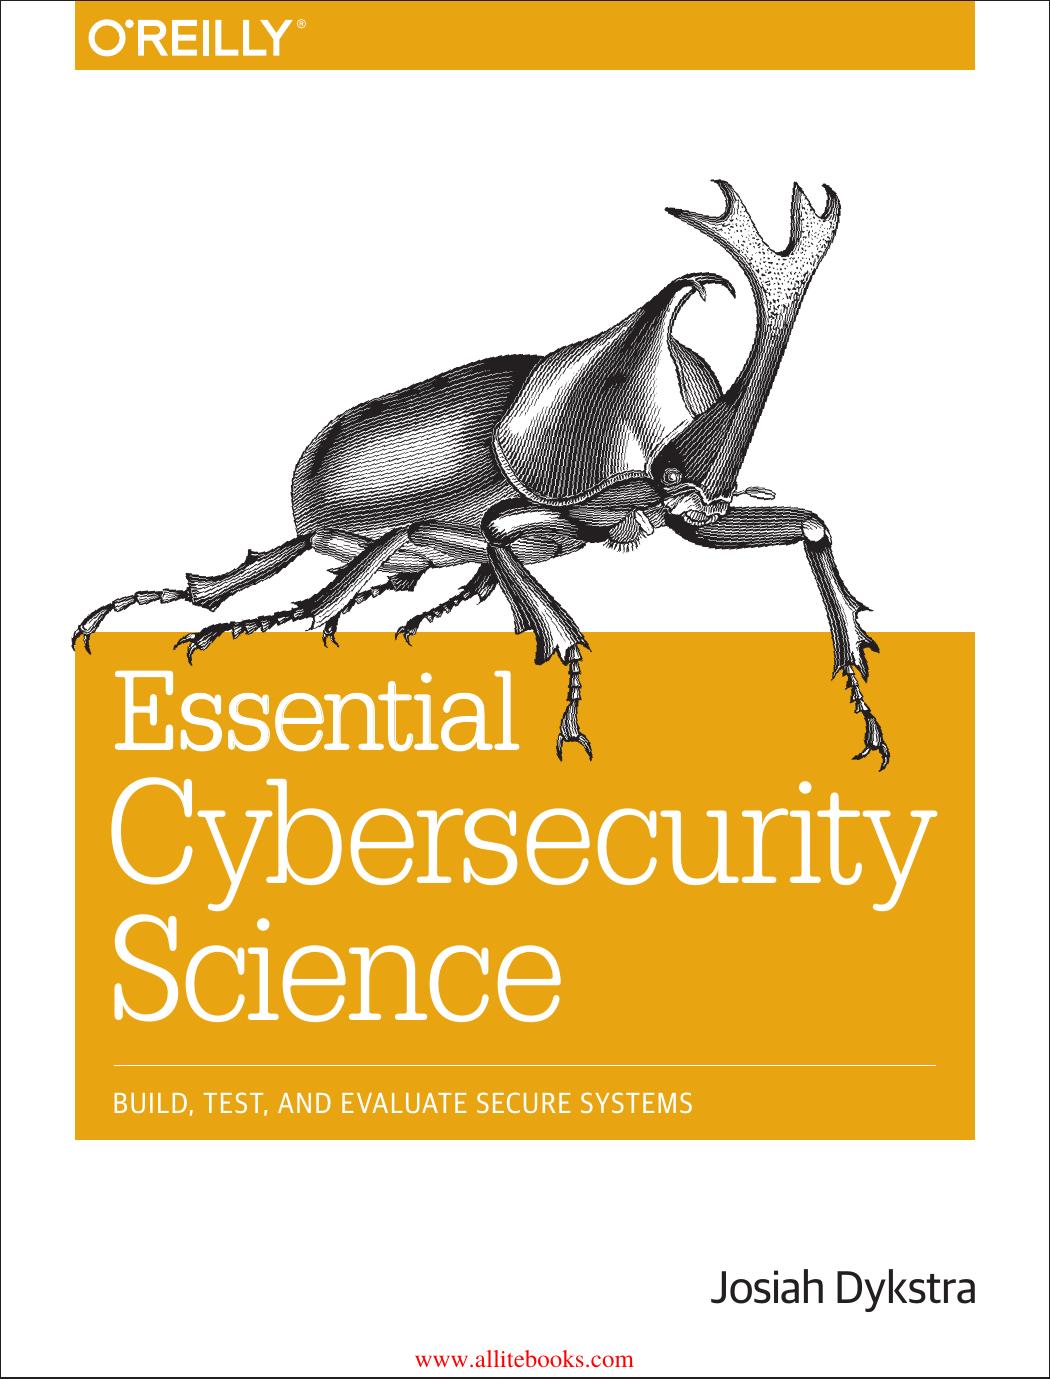 Essential Cybersecurity Science by Josiah Dykstra